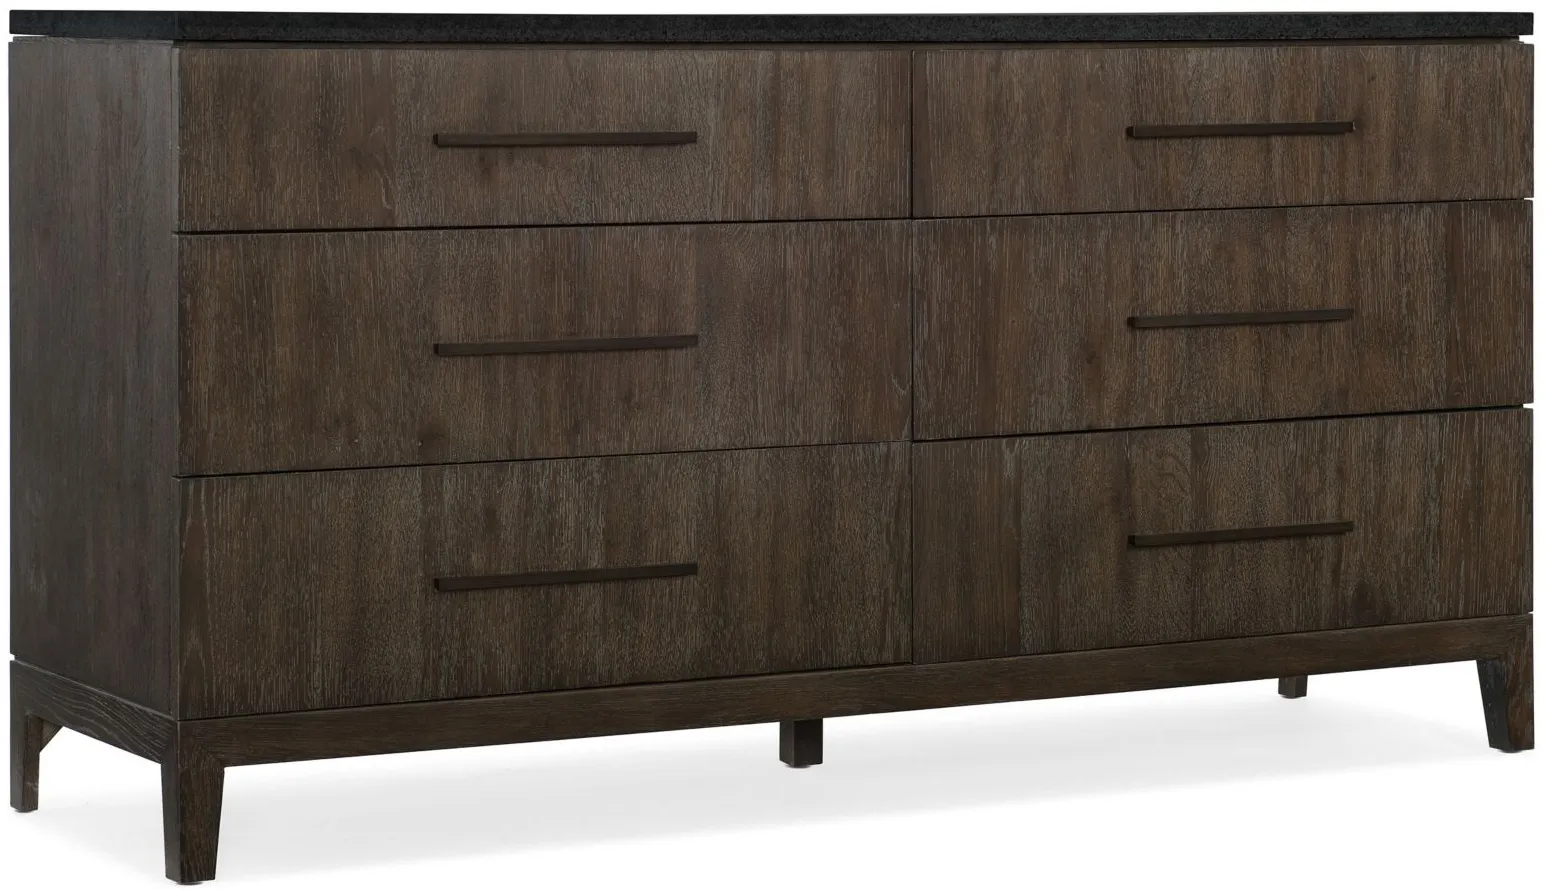 Miramar Six-Drawer Dresser in 6202-DKW Rustic oak with a smoky Arabica finish and bluestone top by Hooker Furniture